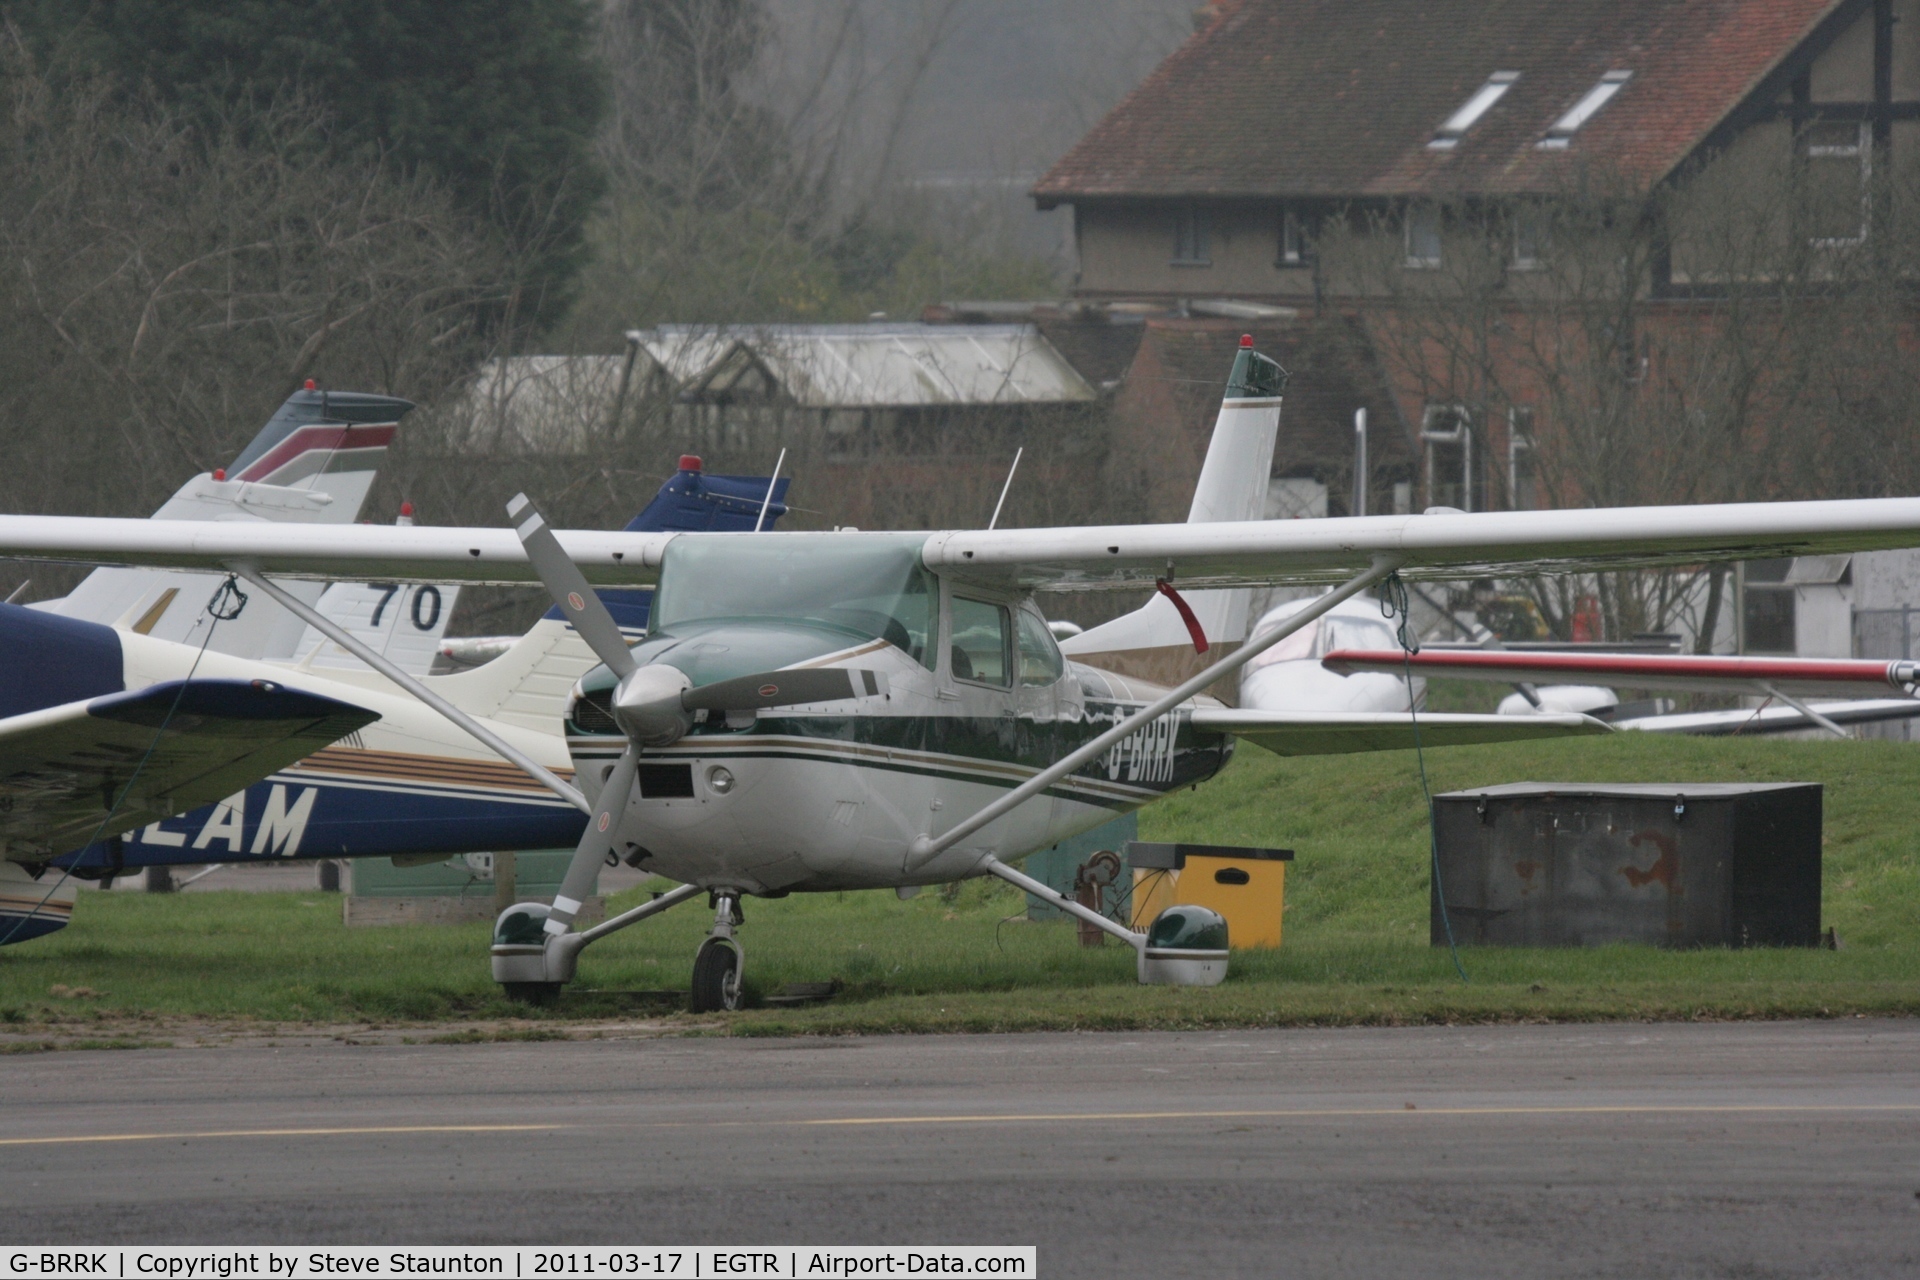 G-BRRK, 1977 Cessna 182Q Skylane C/N 182-66160, Taken at Elstree Airfield March 2011